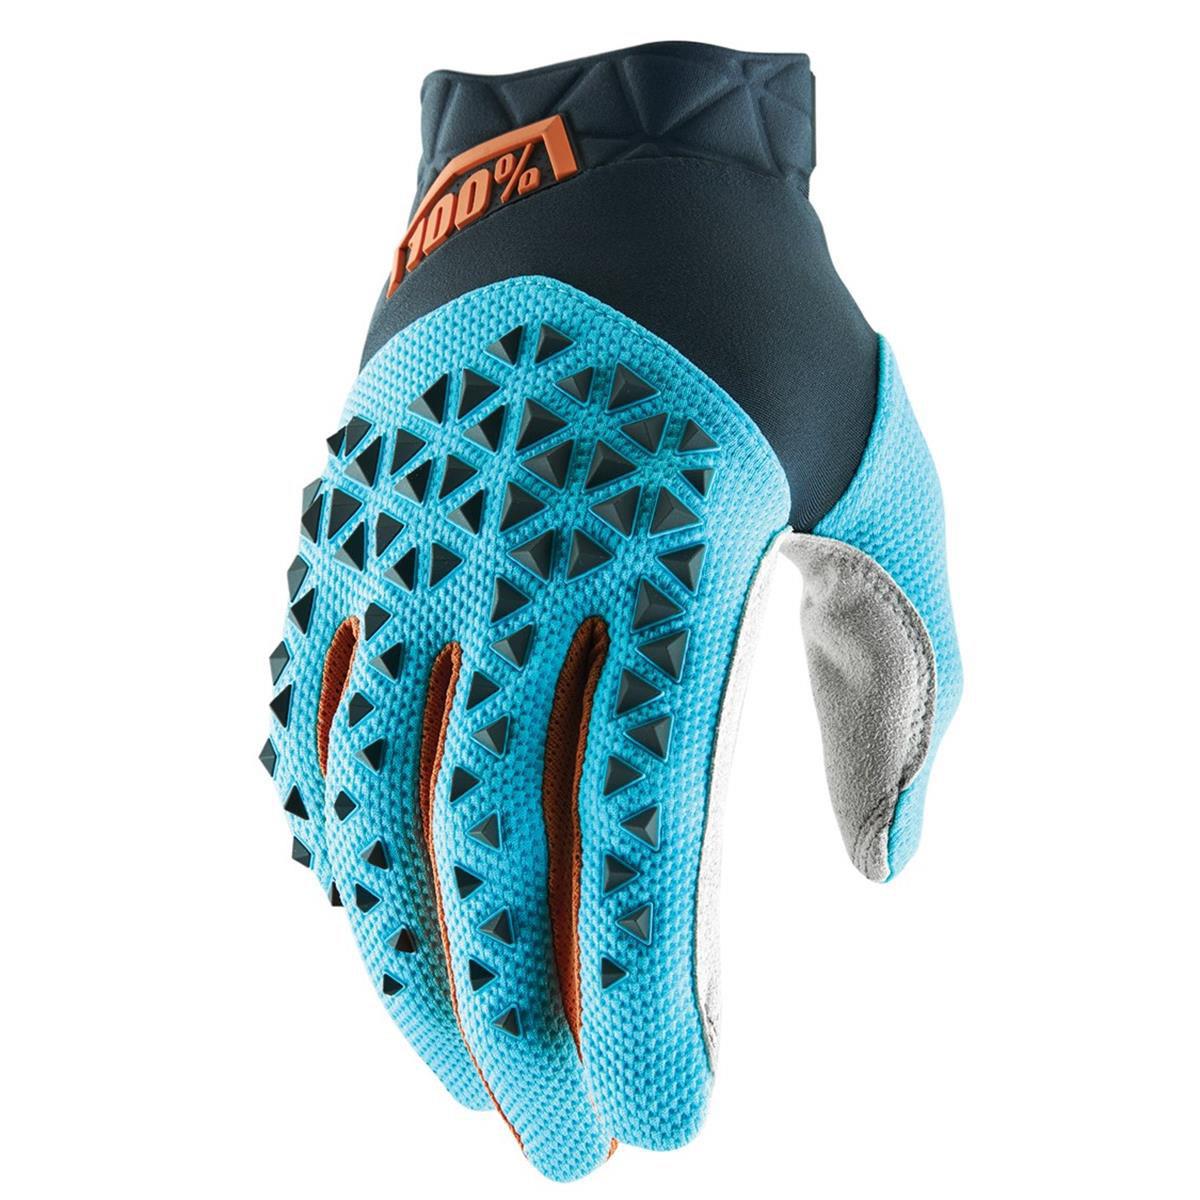 100% Bike Gloves Airmatic Steel grey/Ice Blue/Bronze